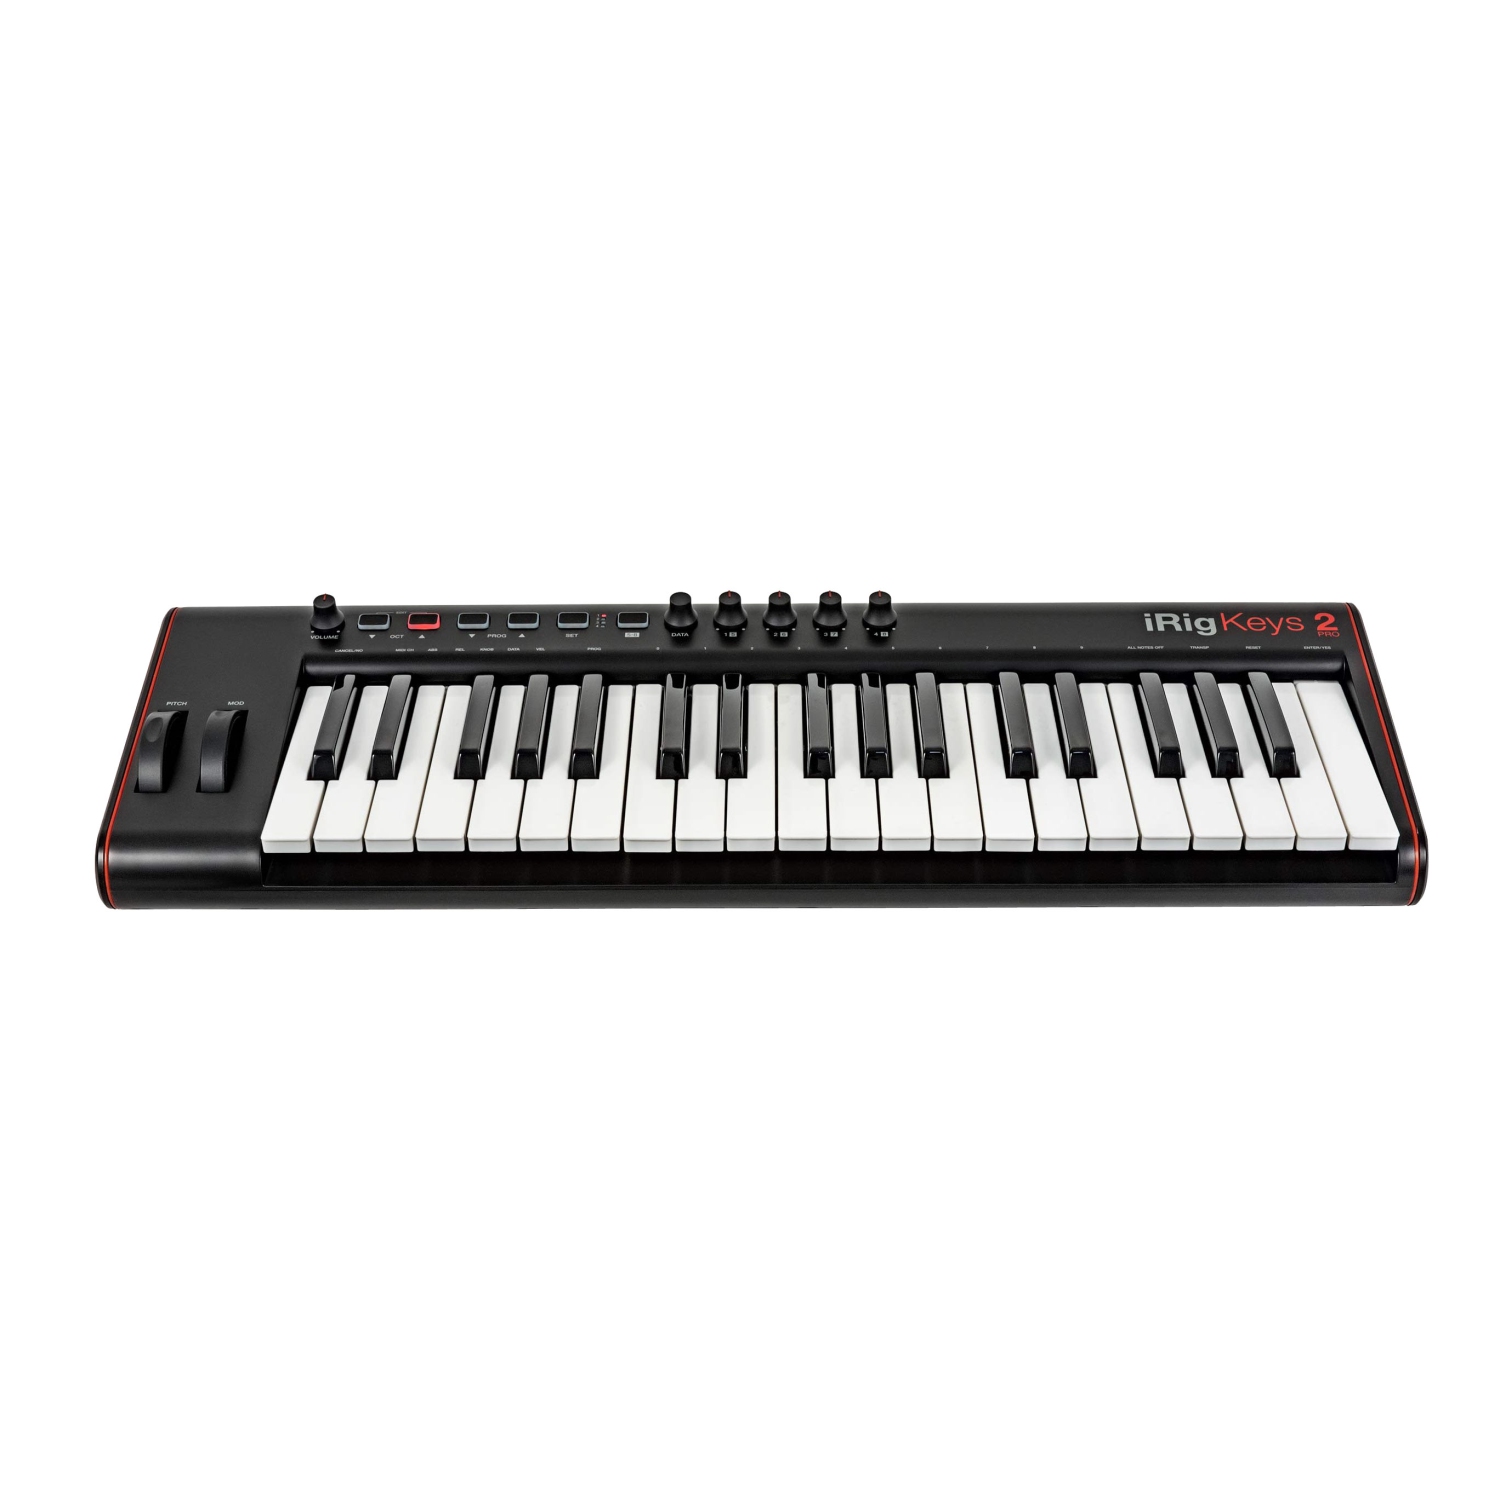 IK Multimedia iRig Keys 2 Pro Full-Size 37-Key MIDI Controller for iOS/Mac/PC